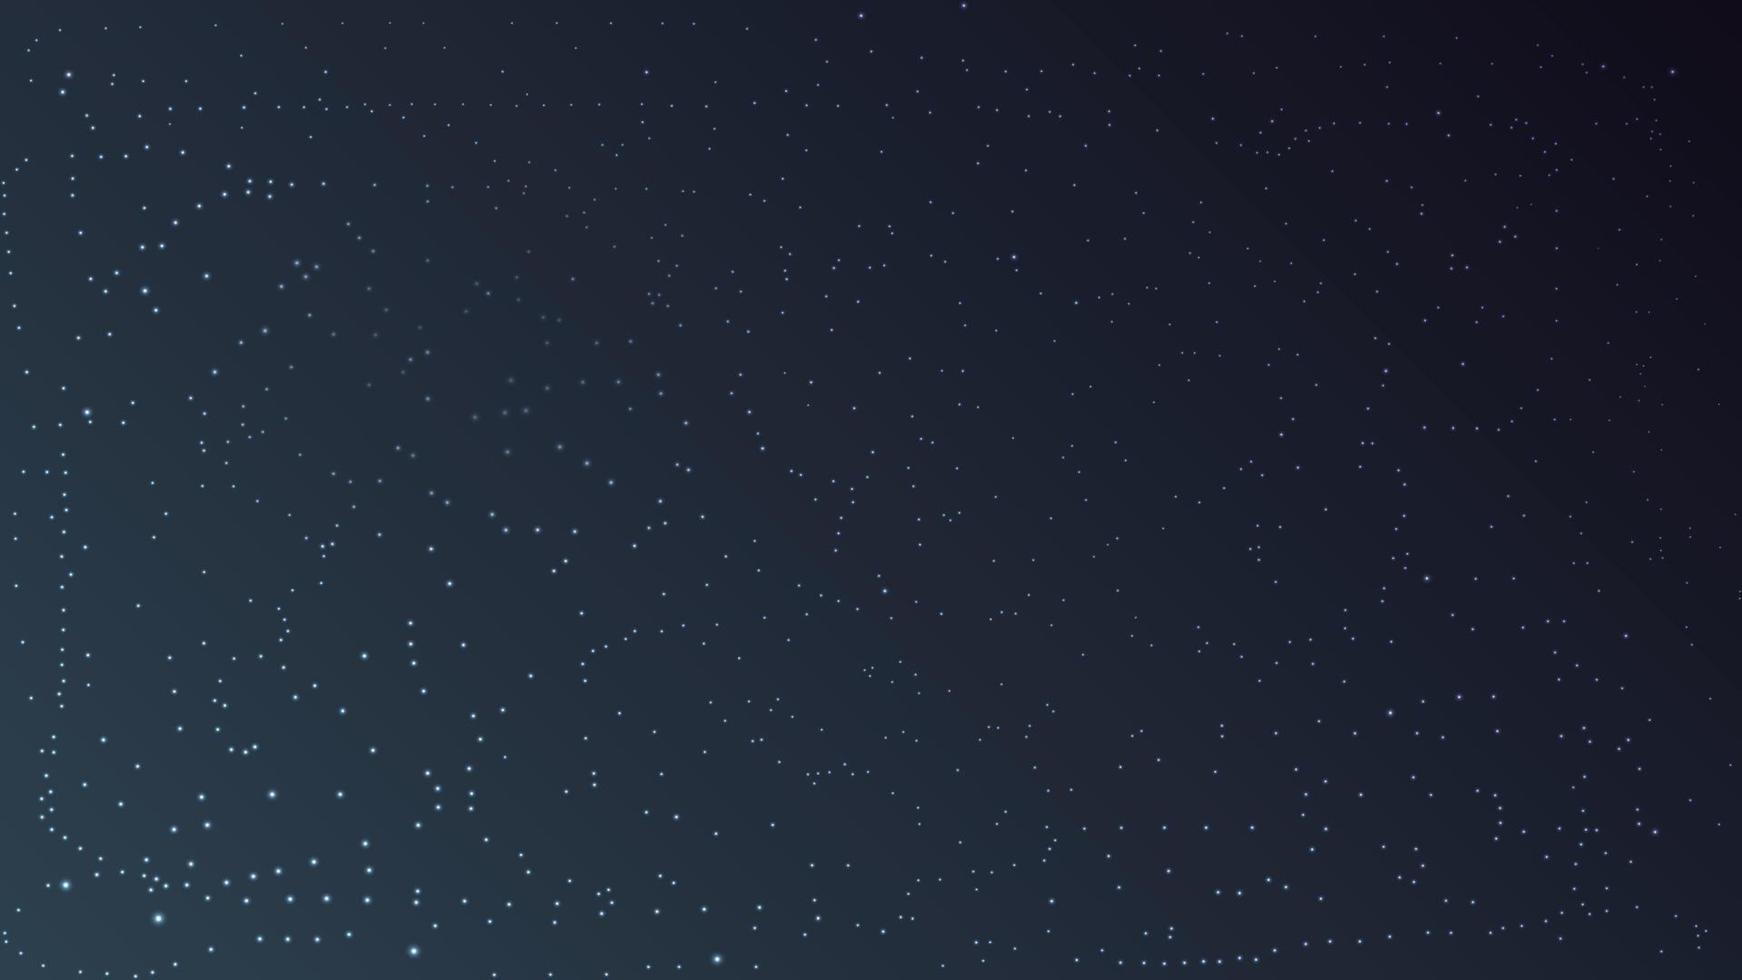 dark background with stars. Vector illustration